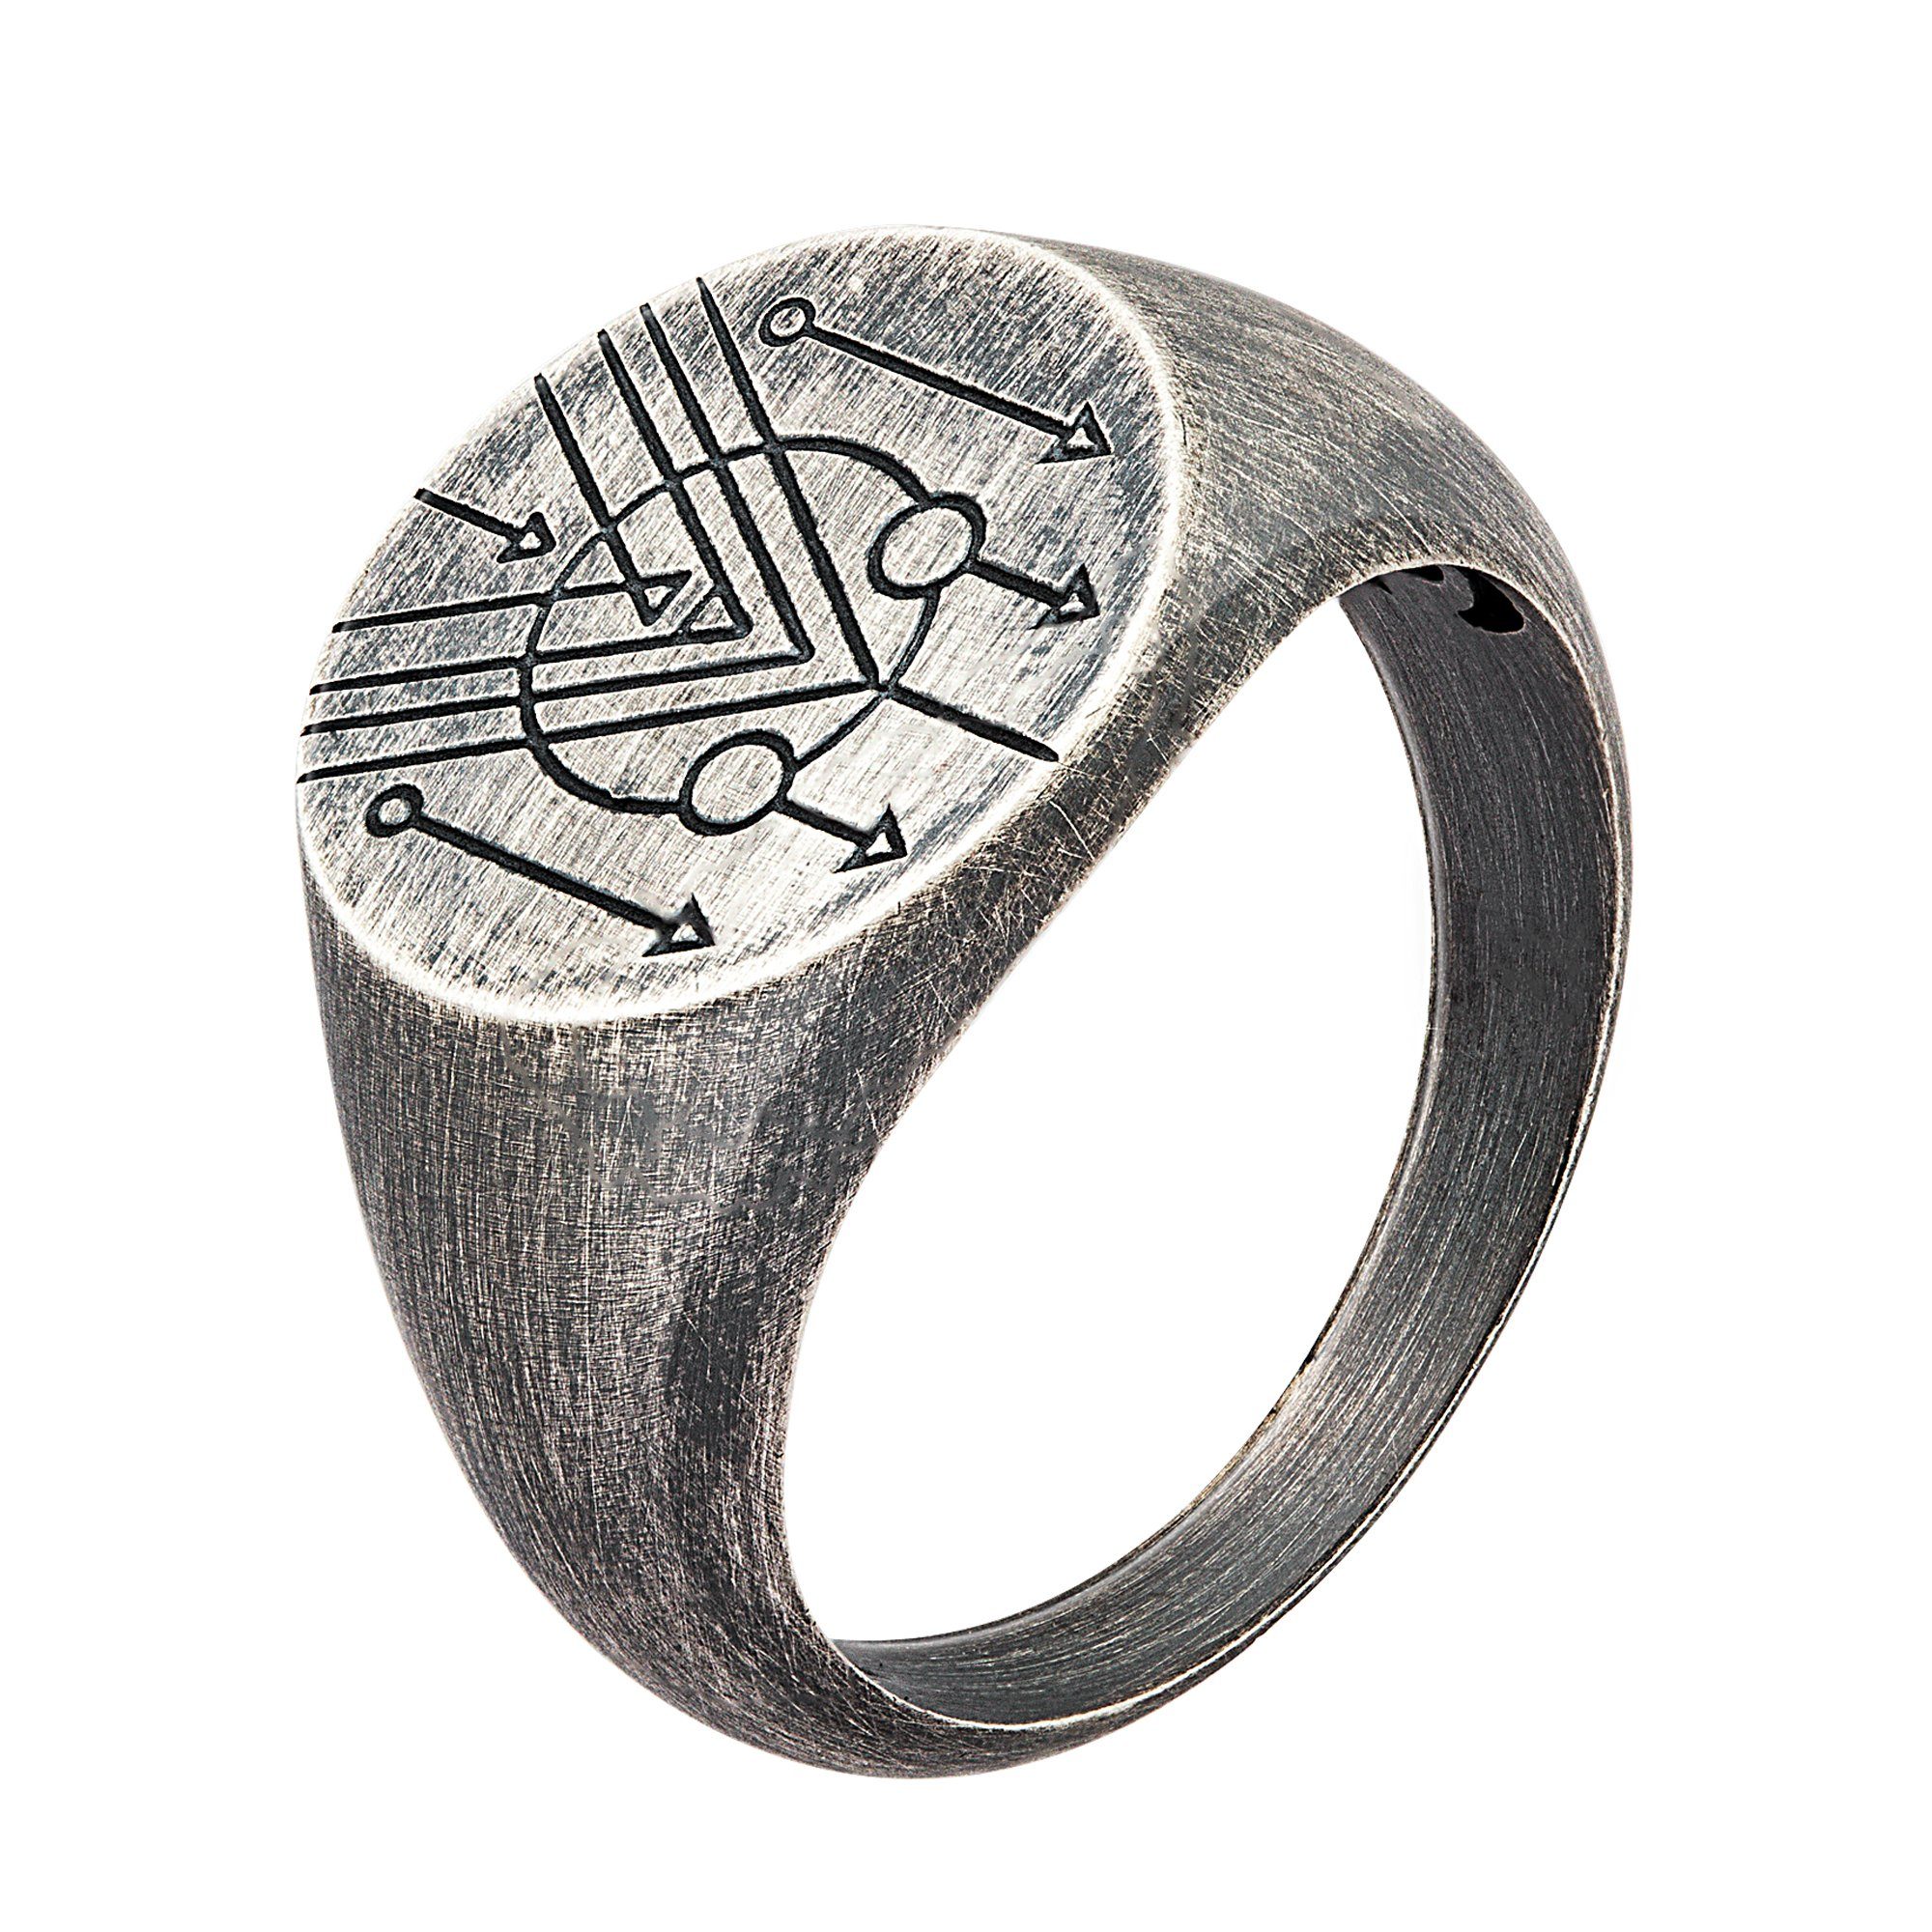 CAÏ Fingerring 925 Silber Siegelring Kreis matt oxidiert Tattoo Motiv grau